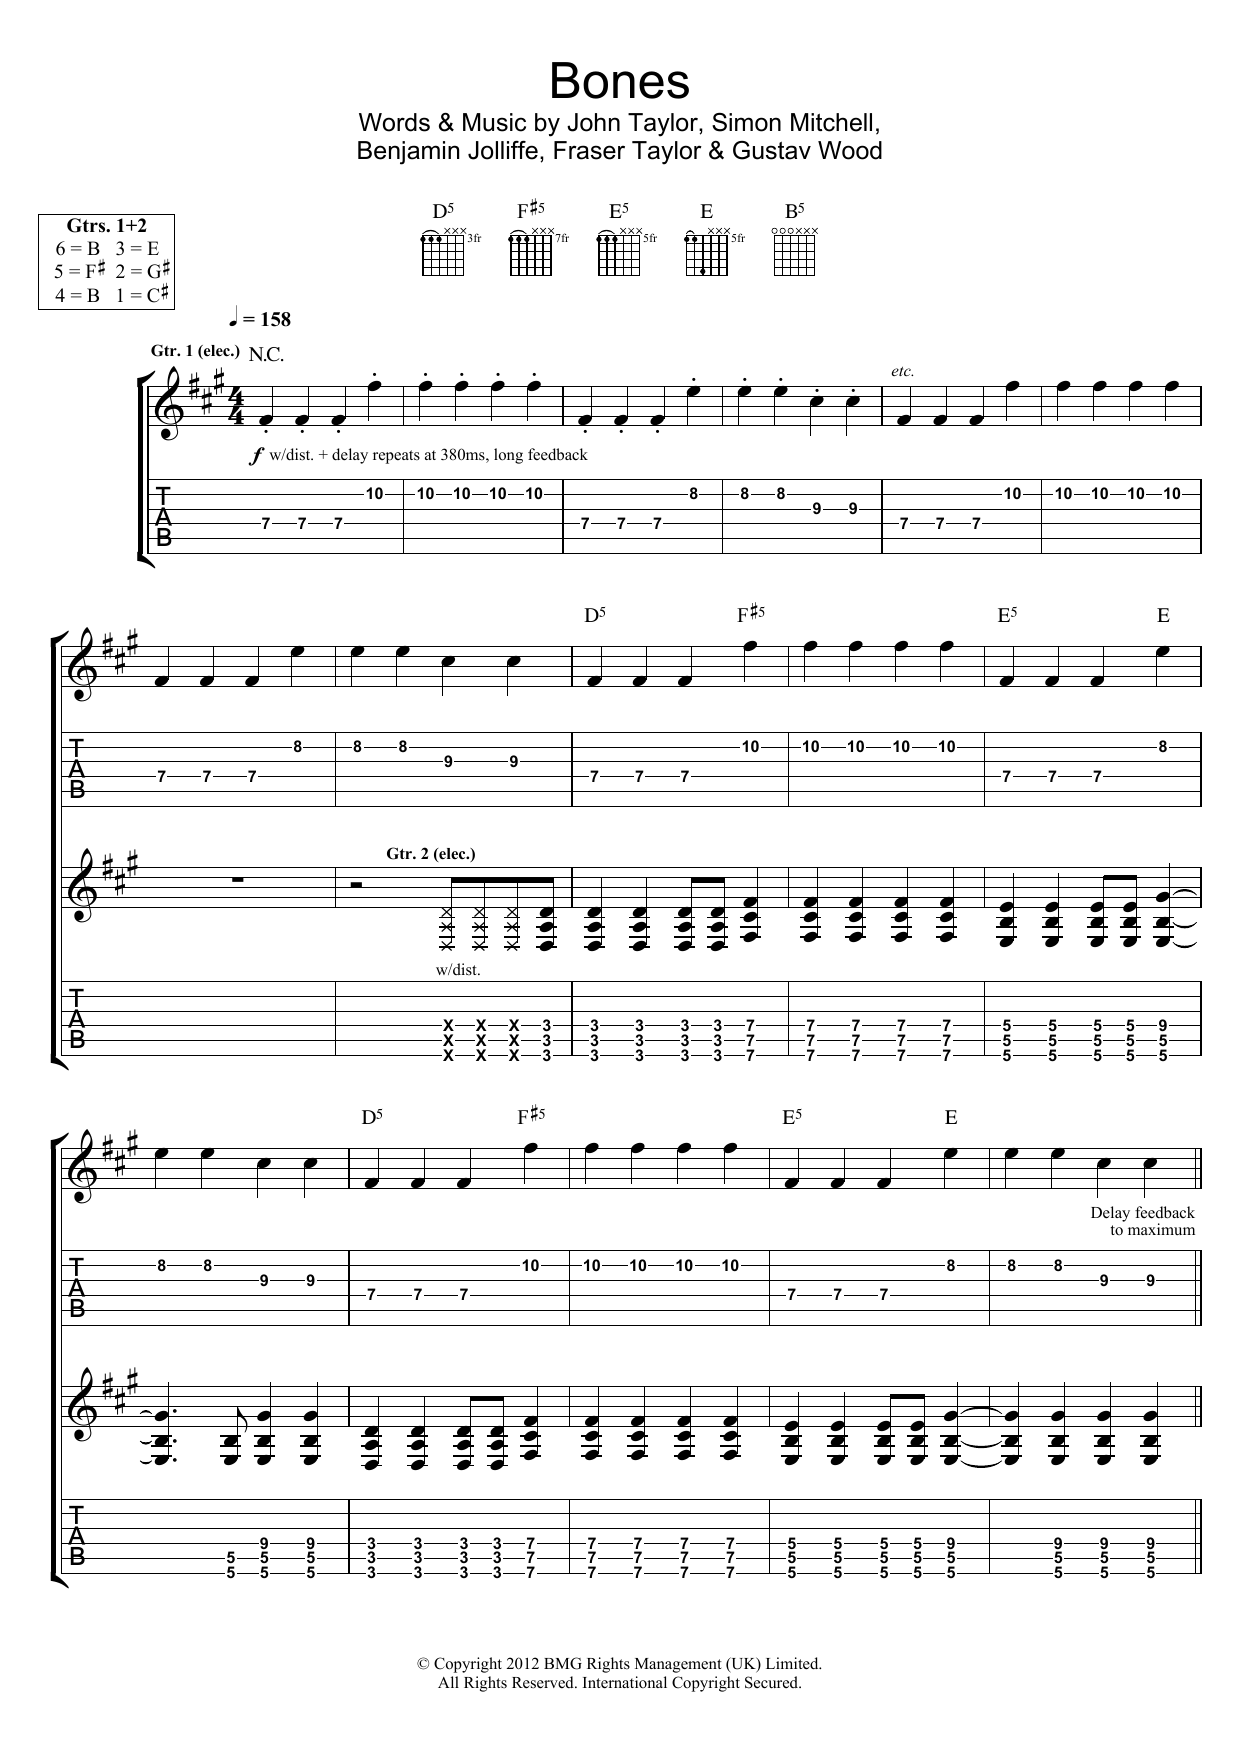 Young Guns Bones Sheet Music Notes & Chords for Guitar Tab - Download or Print PDF